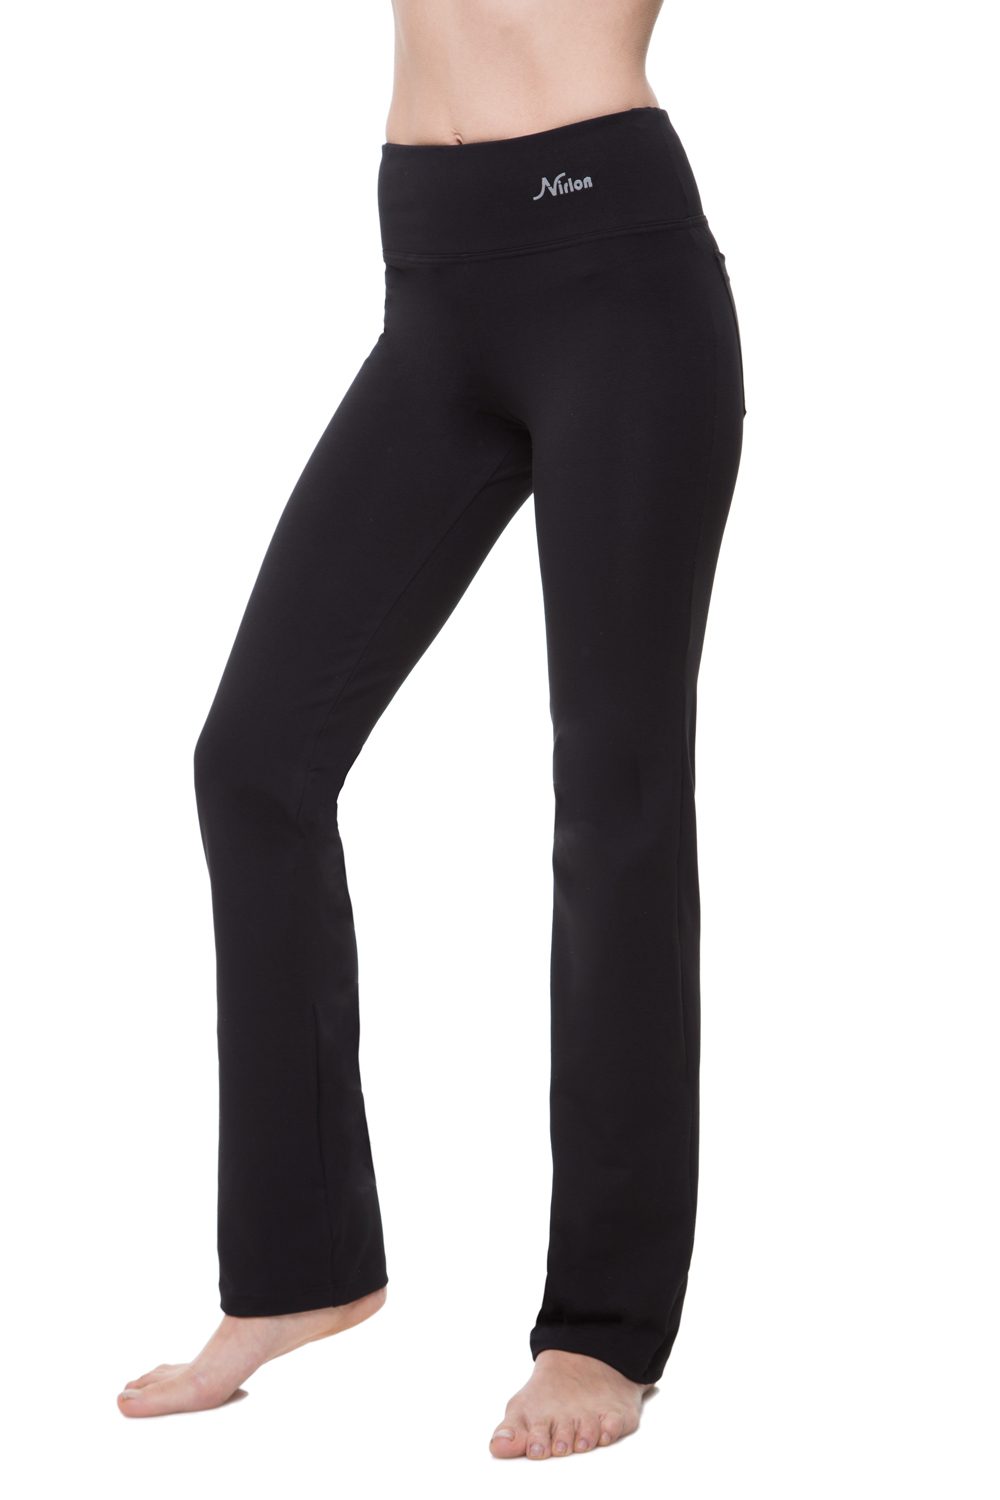 Dallonan Flare Yoga Pants Women Leggings Soft High Waisted Pants Red Tiger  Head Black at  Women's Clothing store